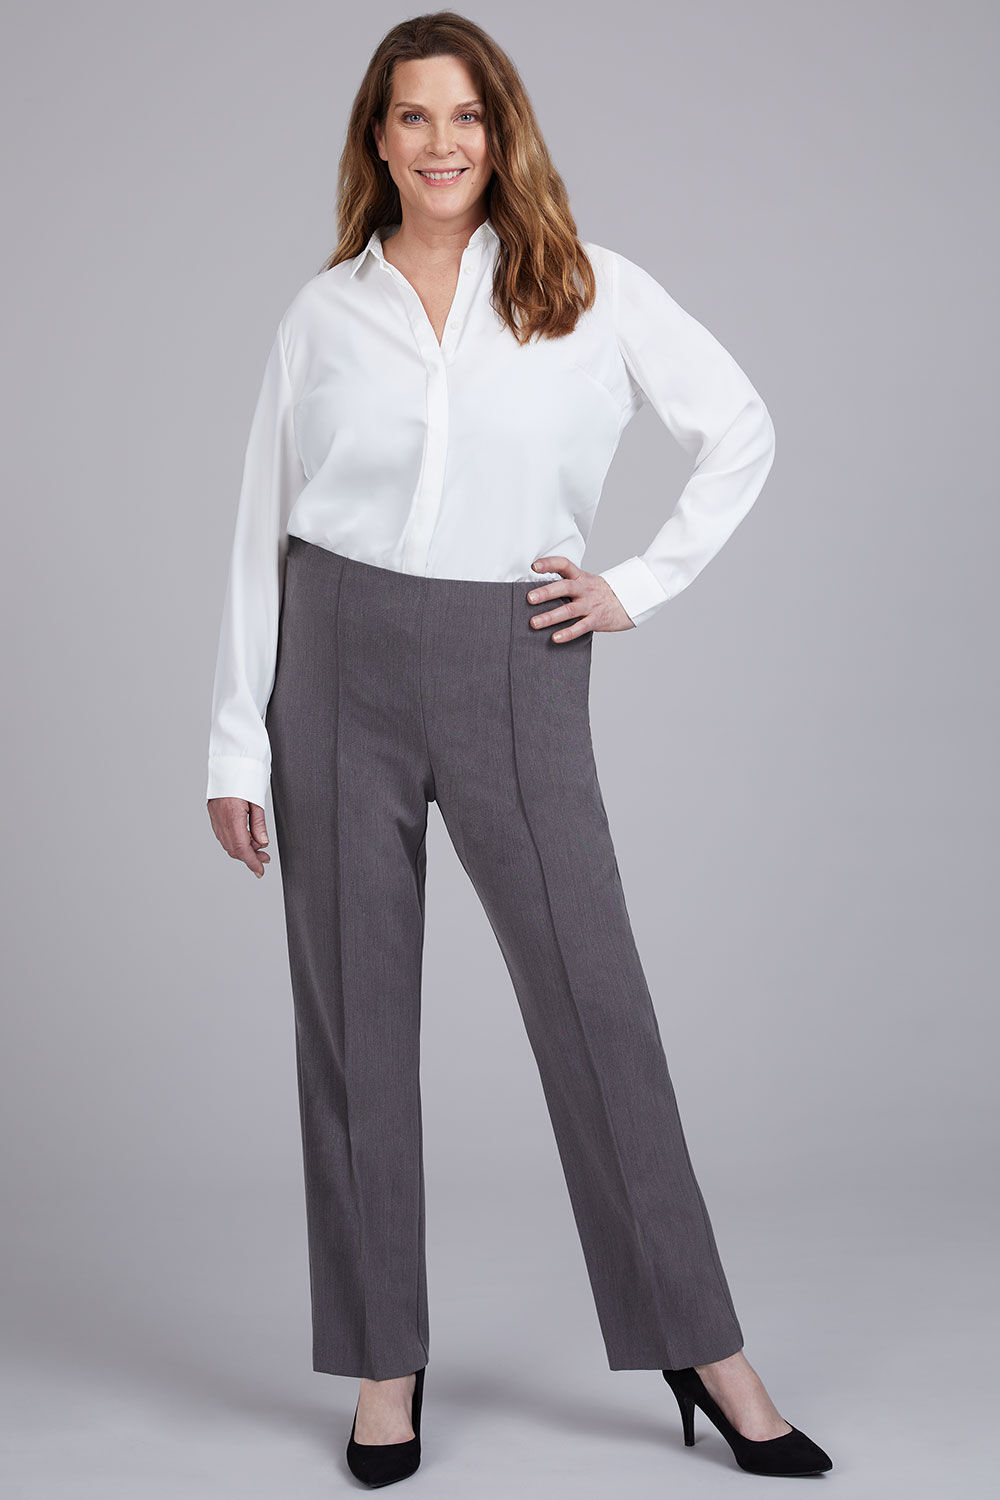 Women's Healthcare Trousers Grey - The Work Uniform Company